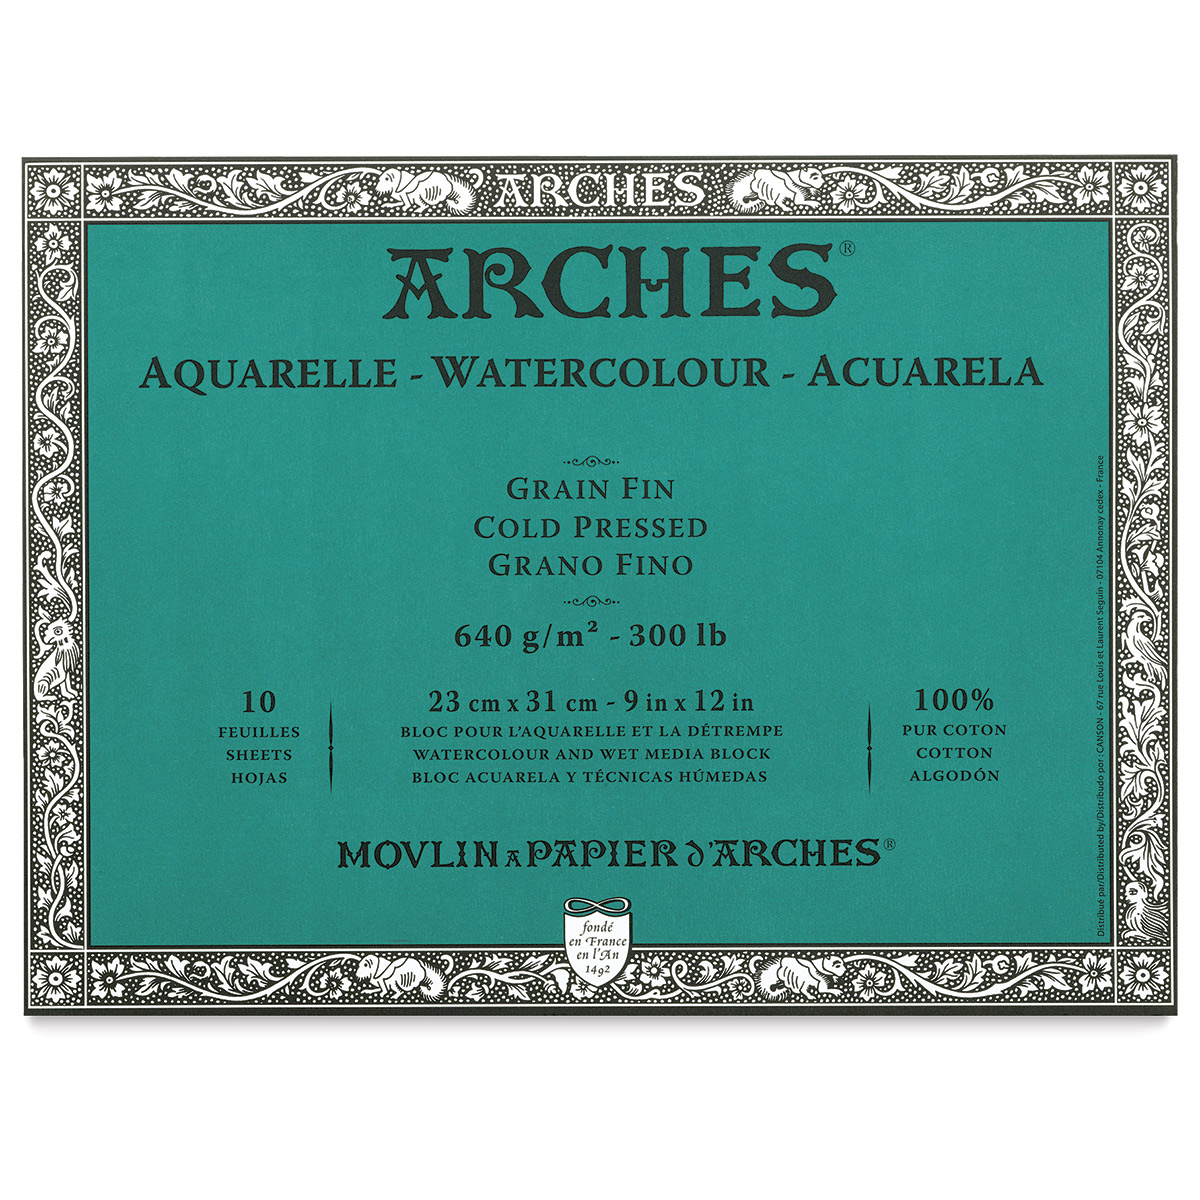 Arches Watercolor Pad Rough Grain, 300 gr, 12 sheets